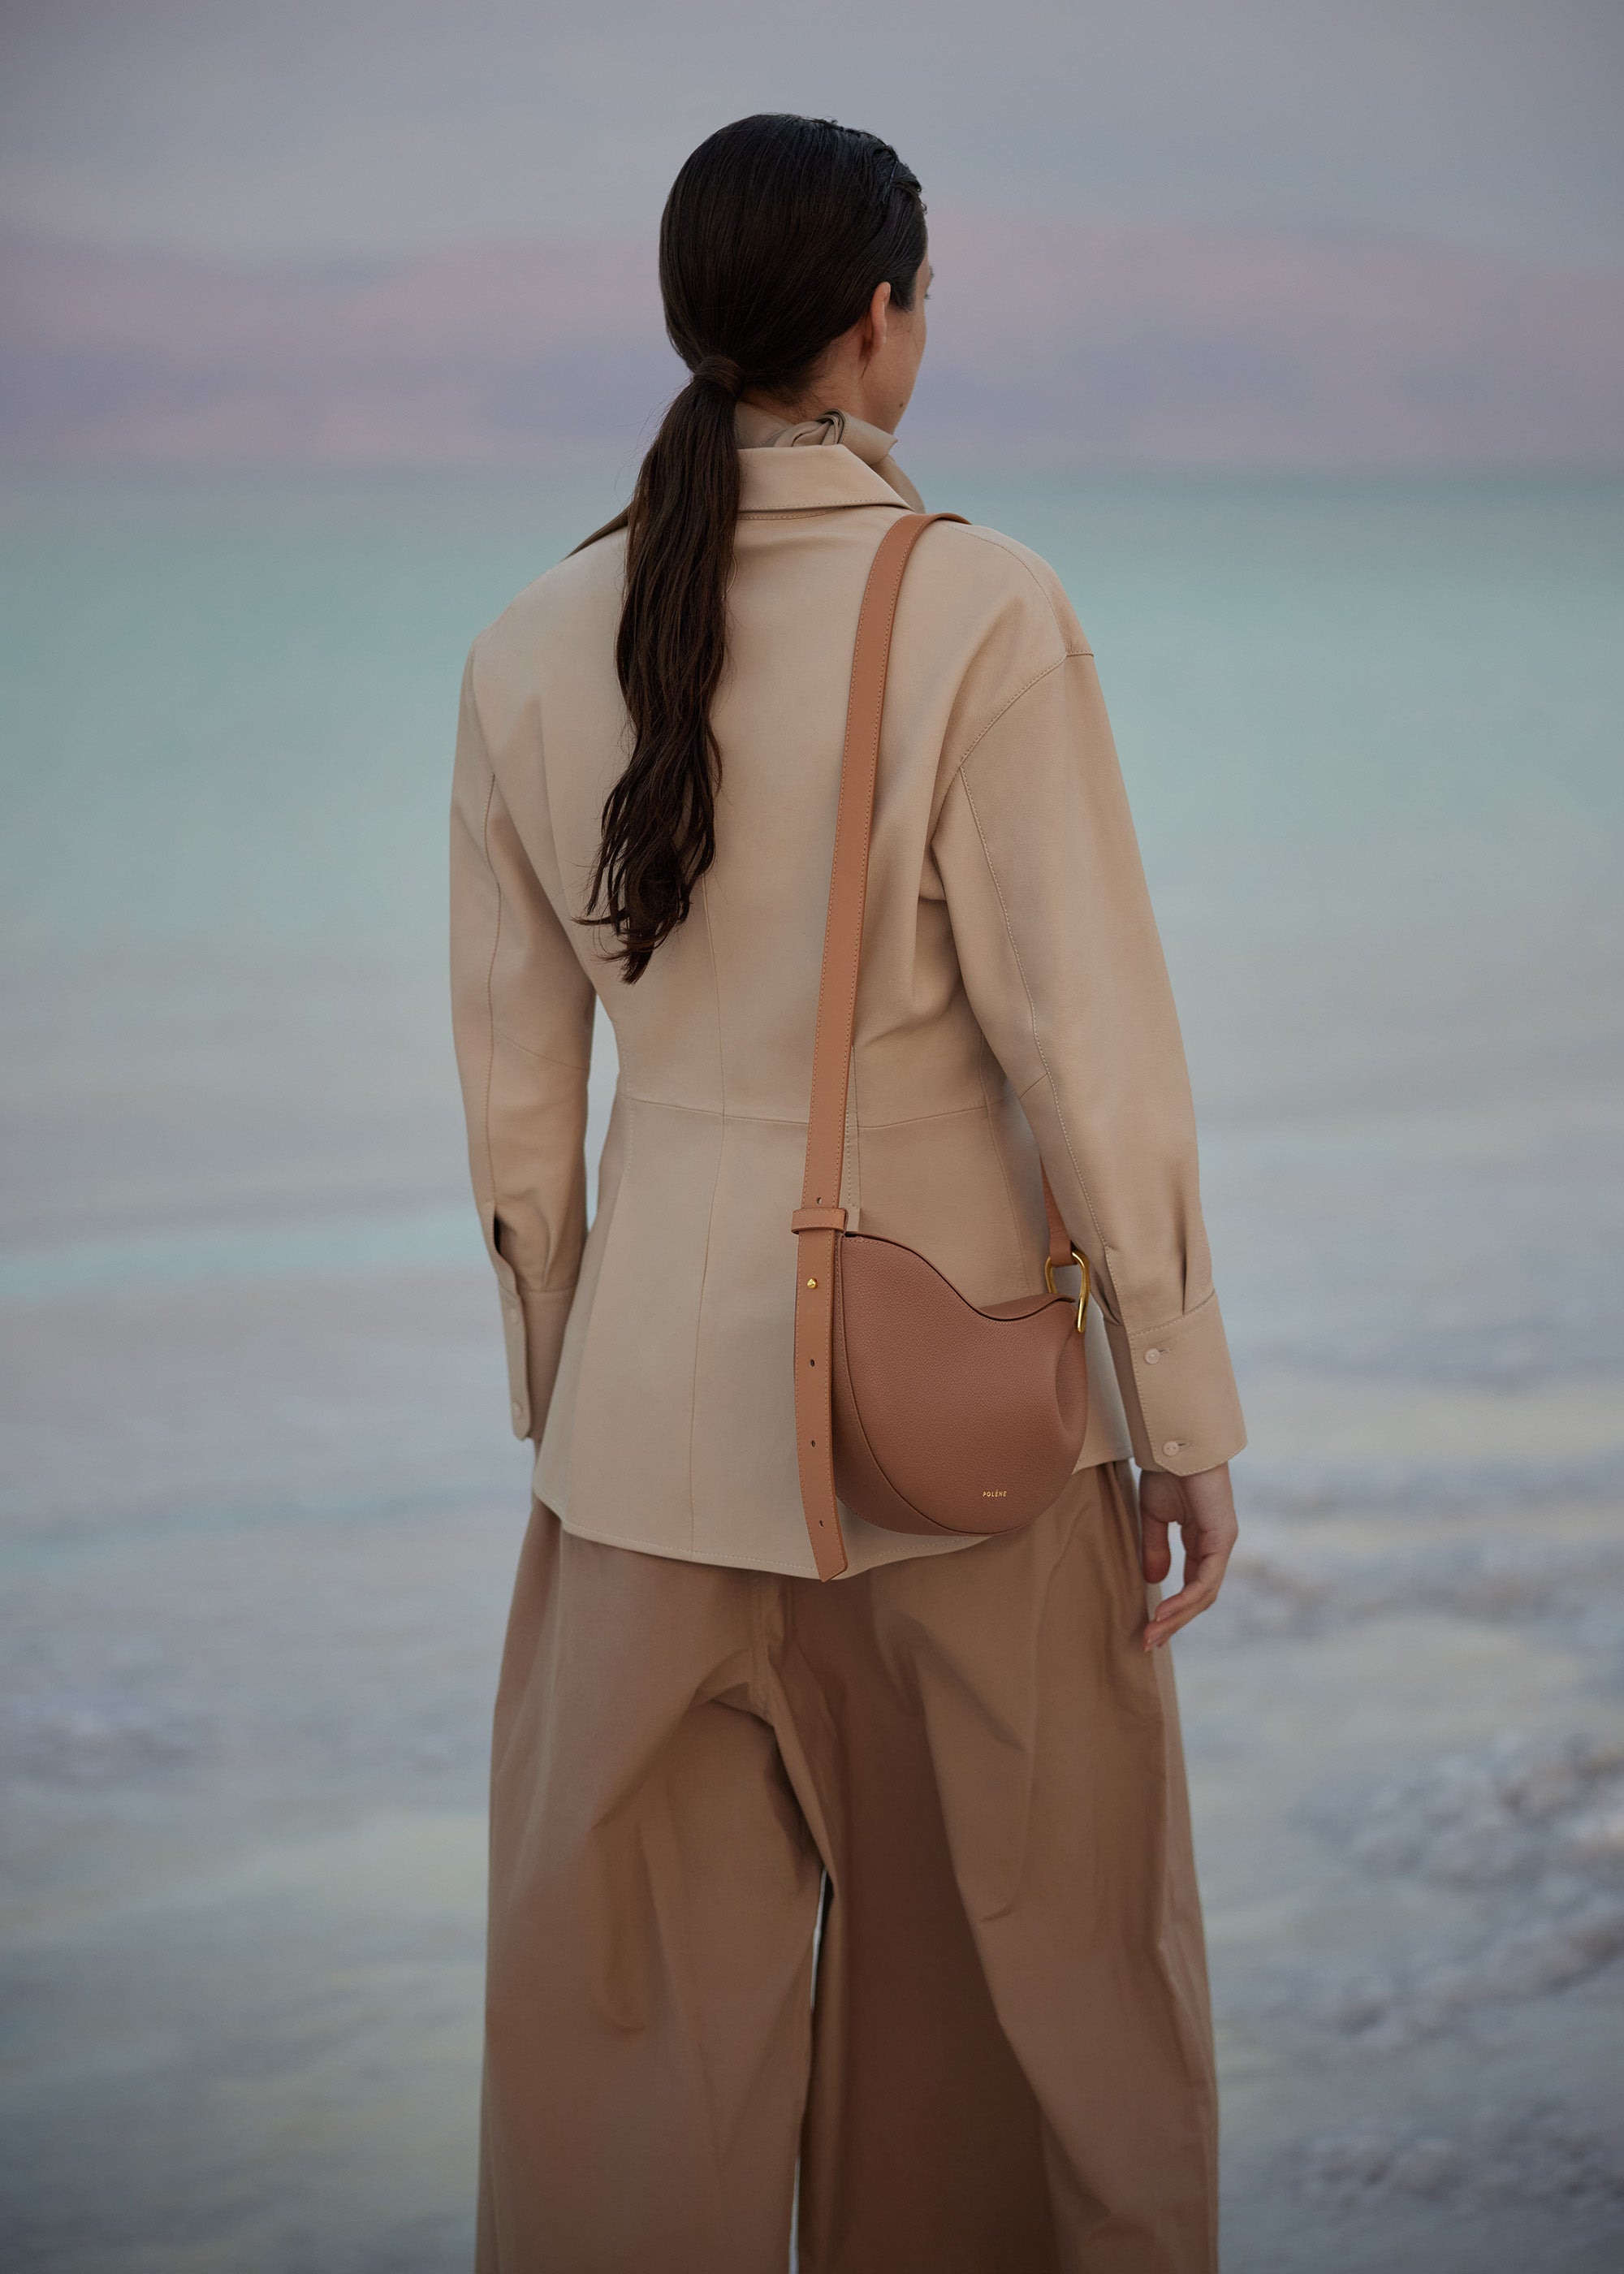 Polène  Bag - Béri - Camel Textured Leather